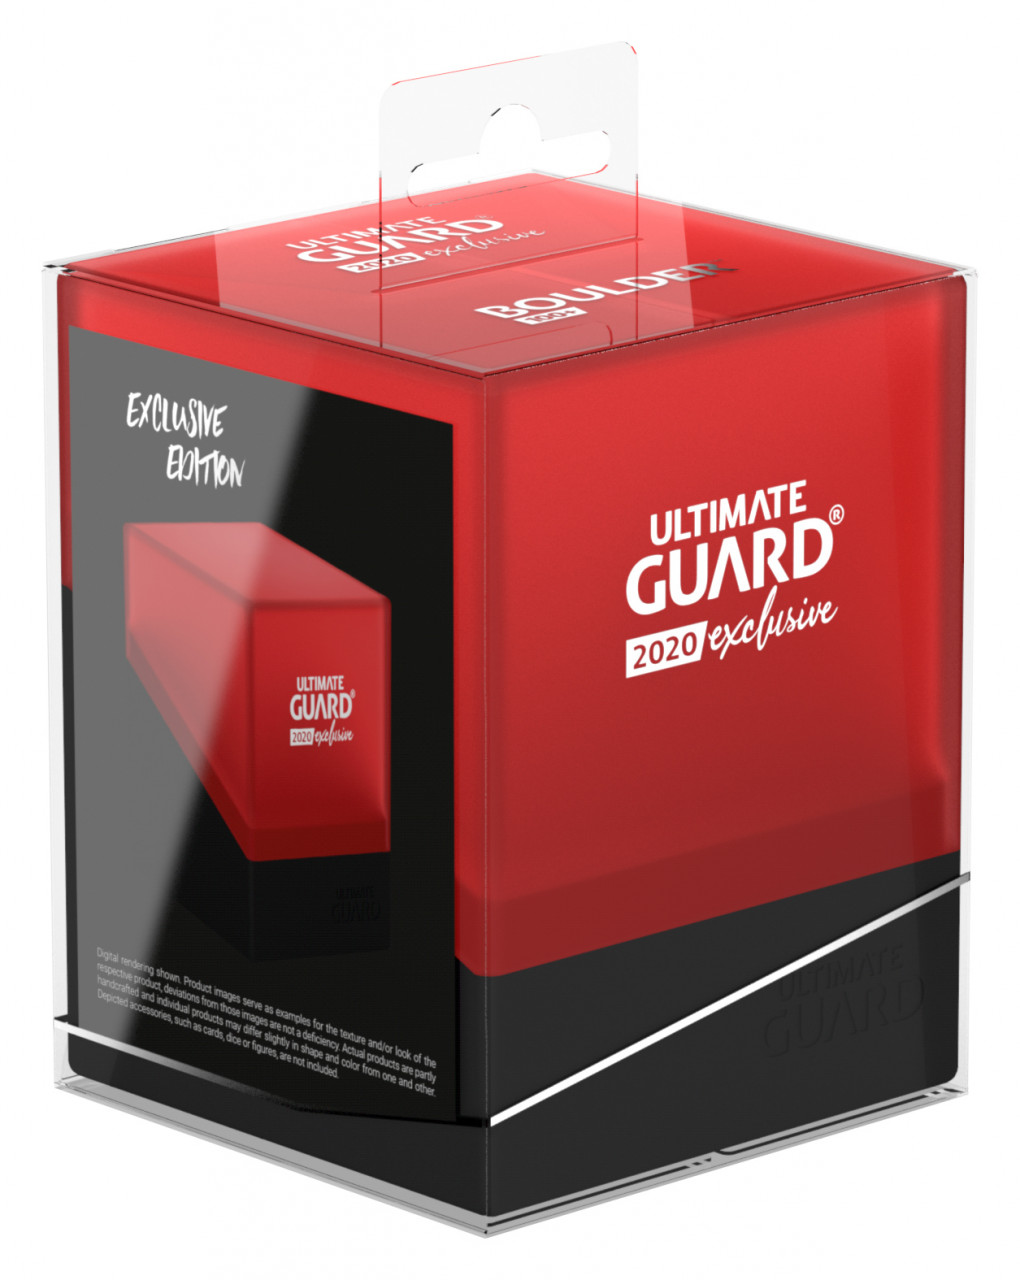 Ultimate Guard 2020 Exclusive - Boulder Deck Case? 100+